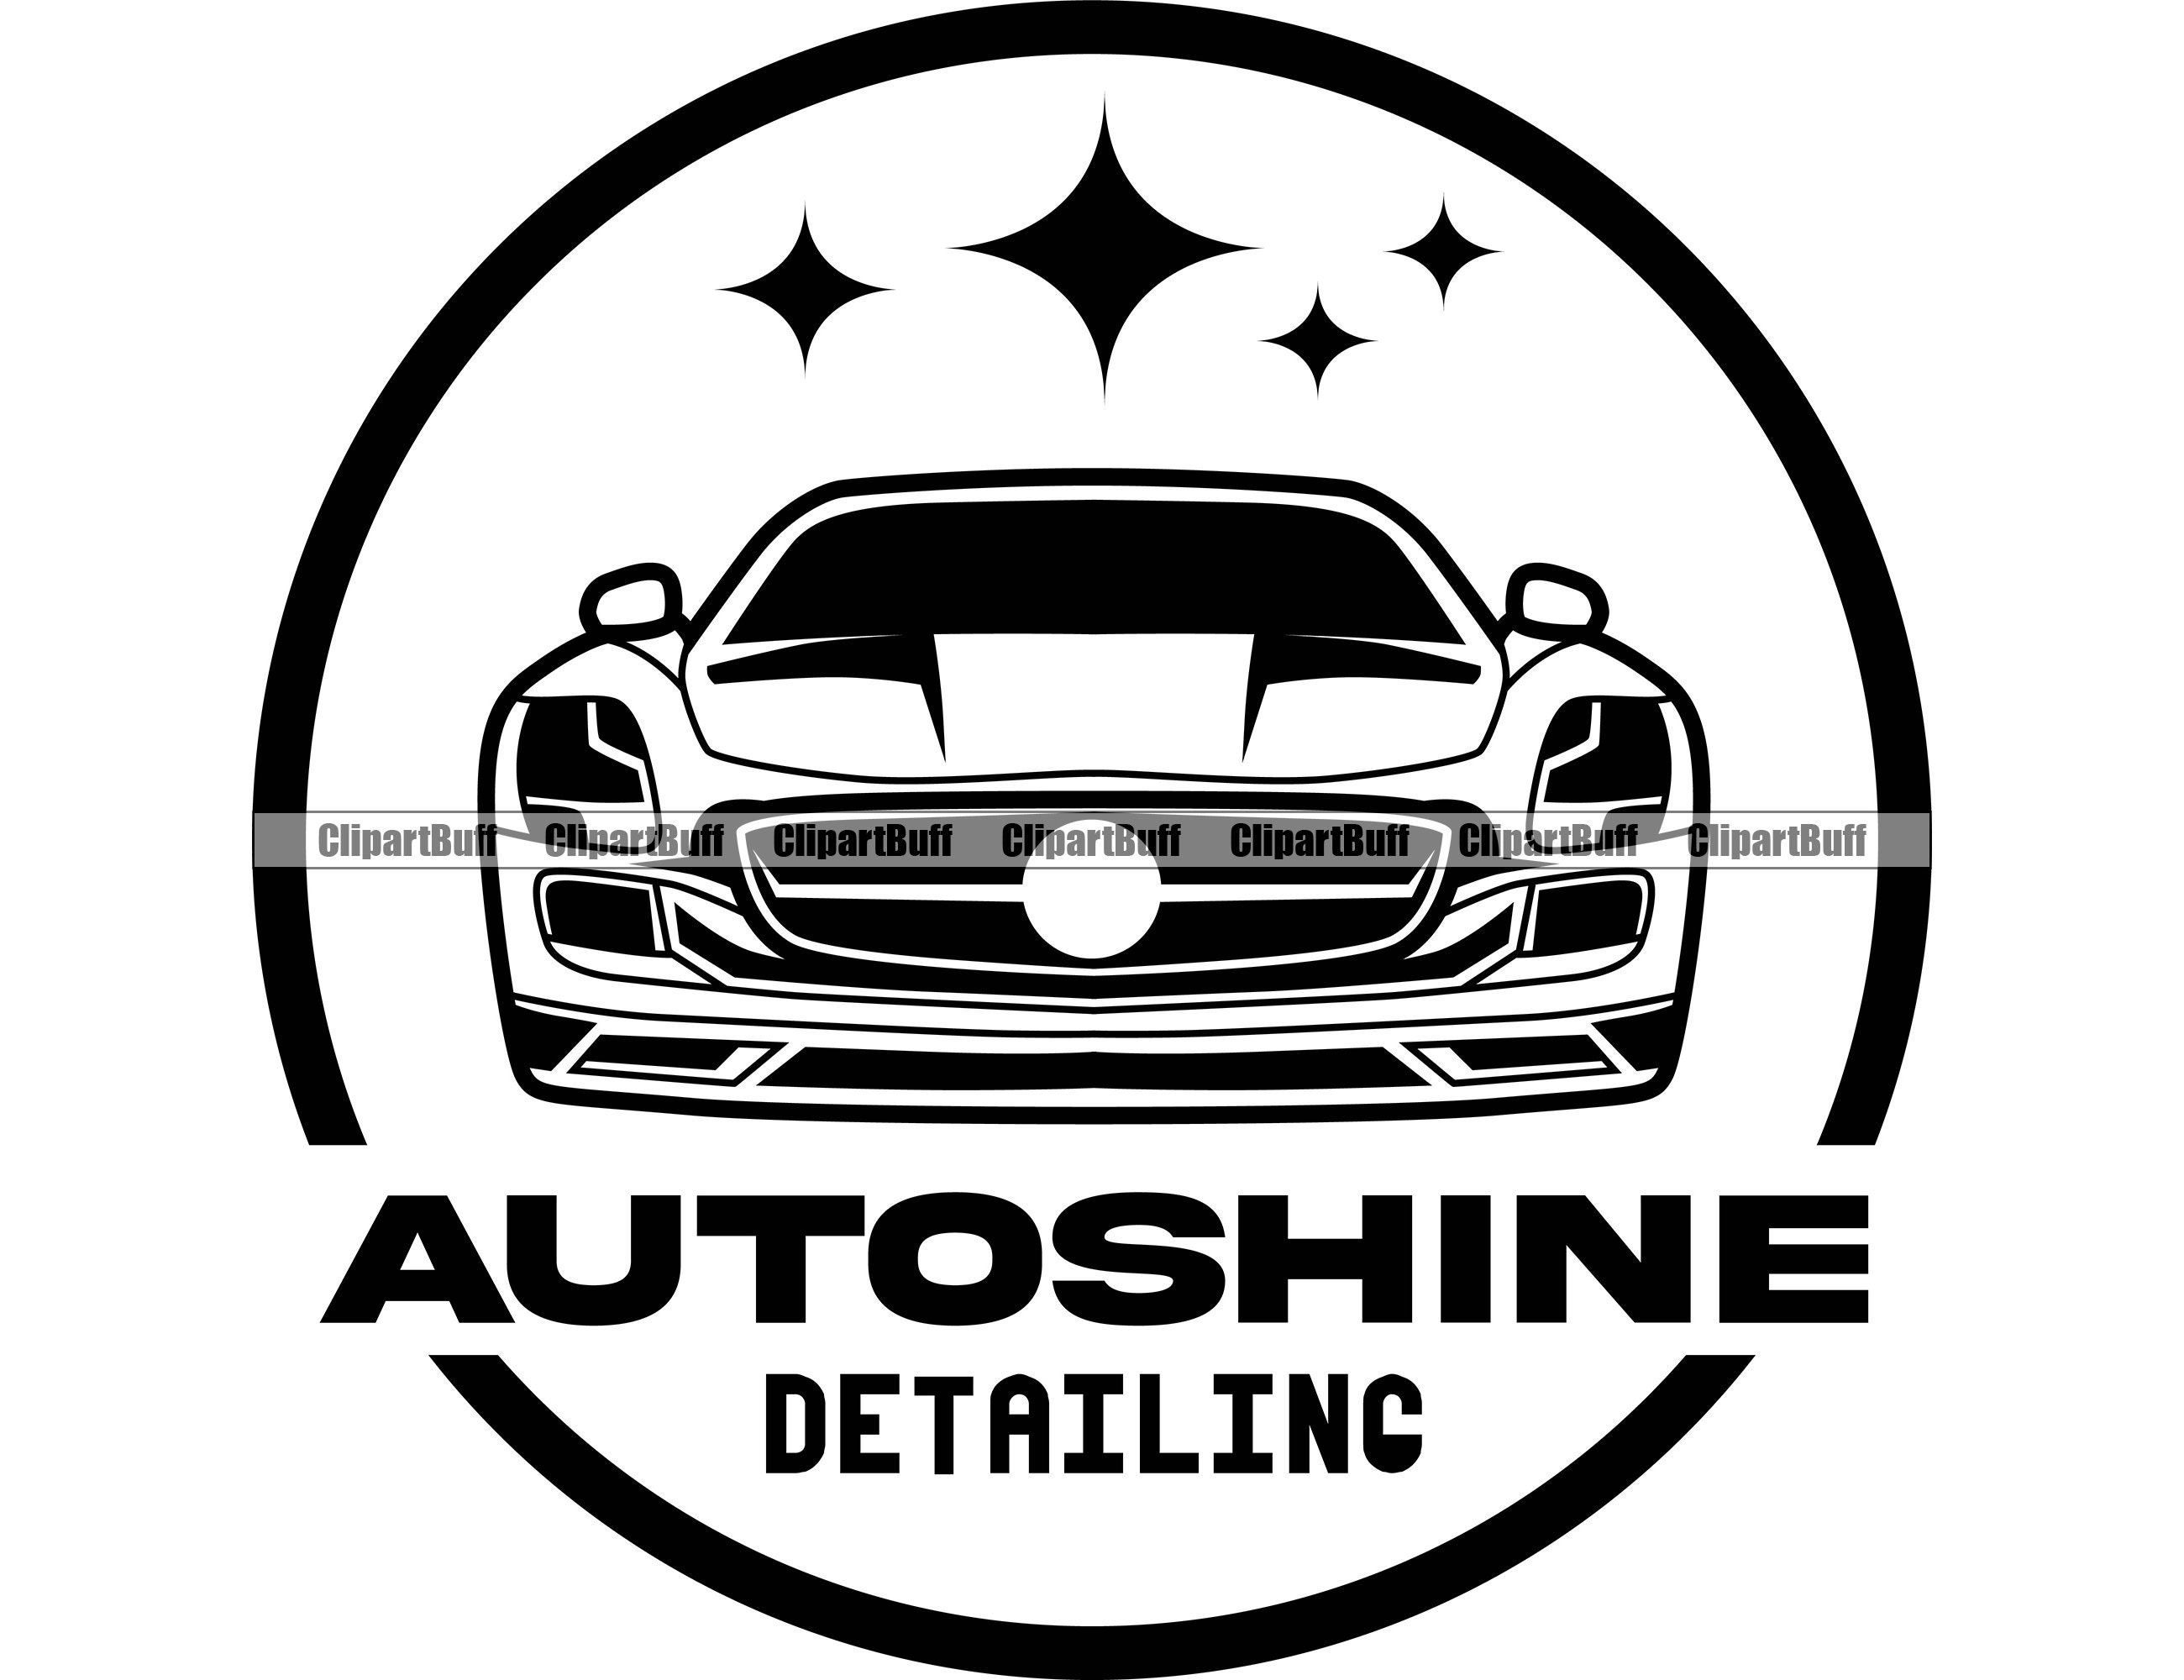 Carproductshop.com  Car detailing, Car detailing kit, Car cleaning hacks